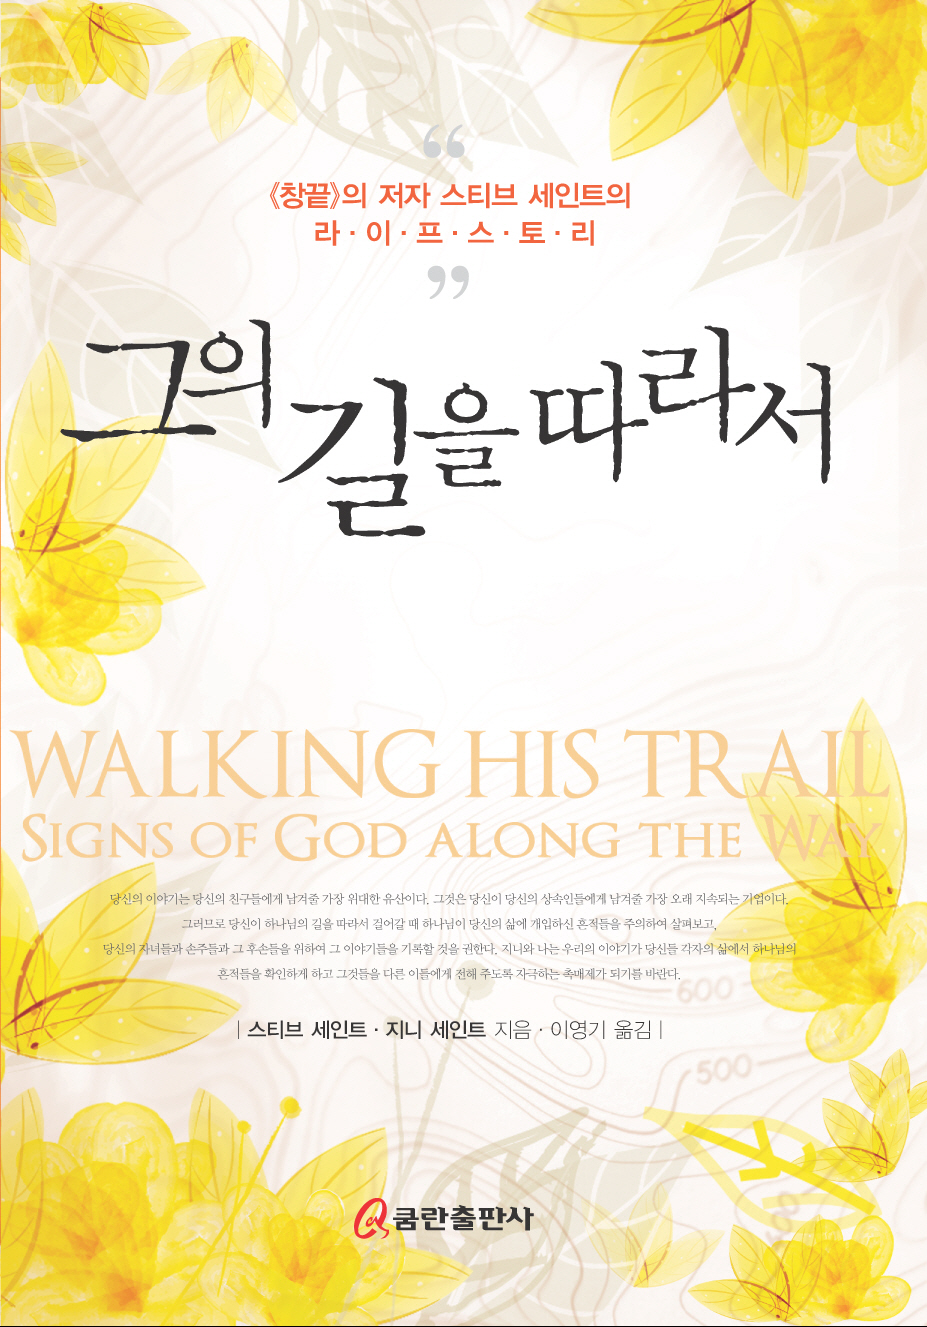   (Walking His Trail)